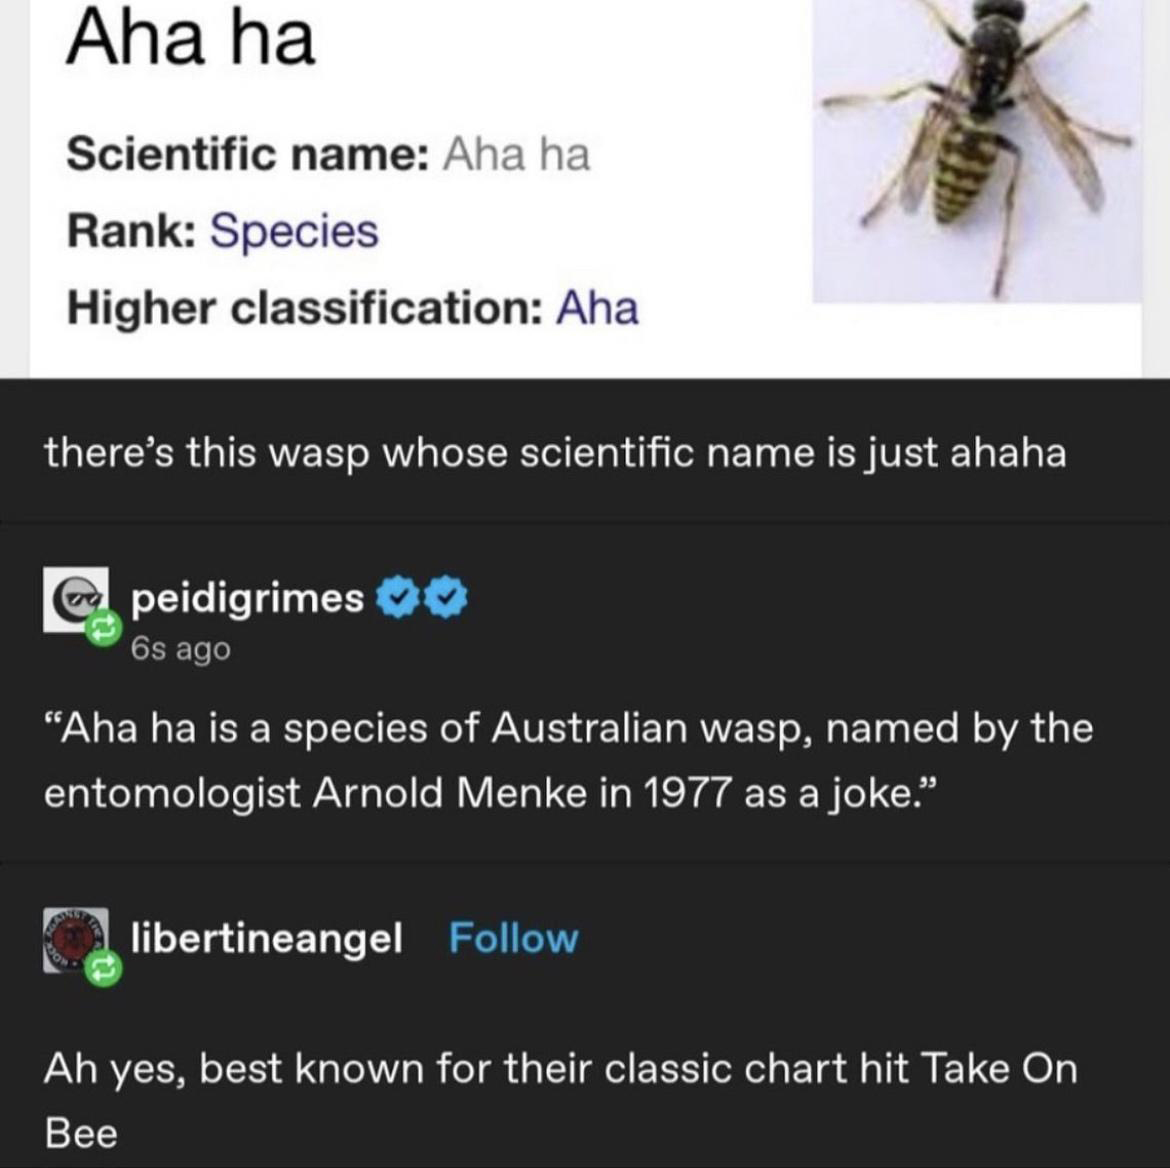 monday morning randomness - aha ha - Aha ha Scientific name Aha ha Rank Species Higher classification Aha there's this wasp whose scientific name is just ahaha peidigrimes 6s ago "Aha ha is a species of Australian wasp, named by the entomologist Arnold Me